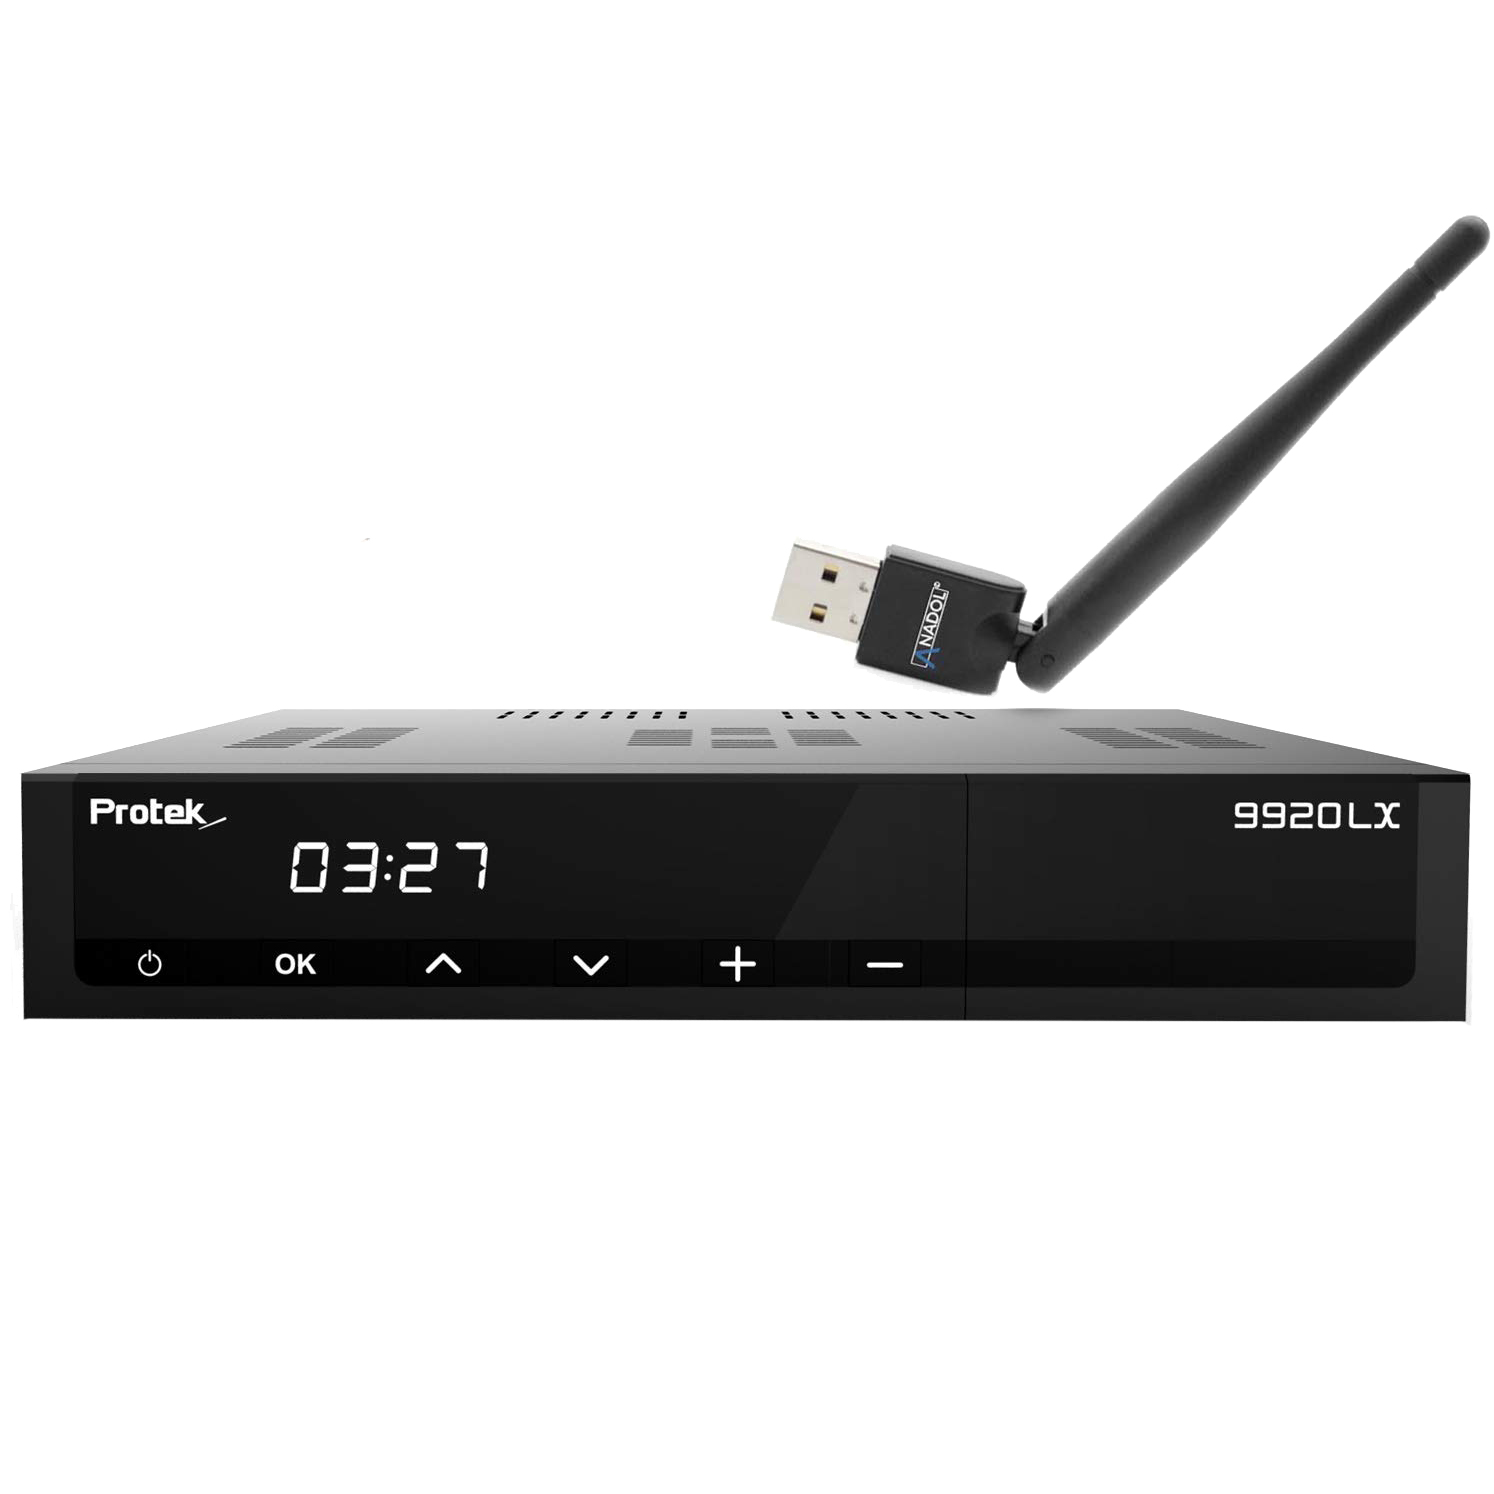 Protek 9920 LX E2 Linux Full HD 1080p HEVC H.265 IPTV Wlan 1xDVB-S2 Sat Receiver Schwarz